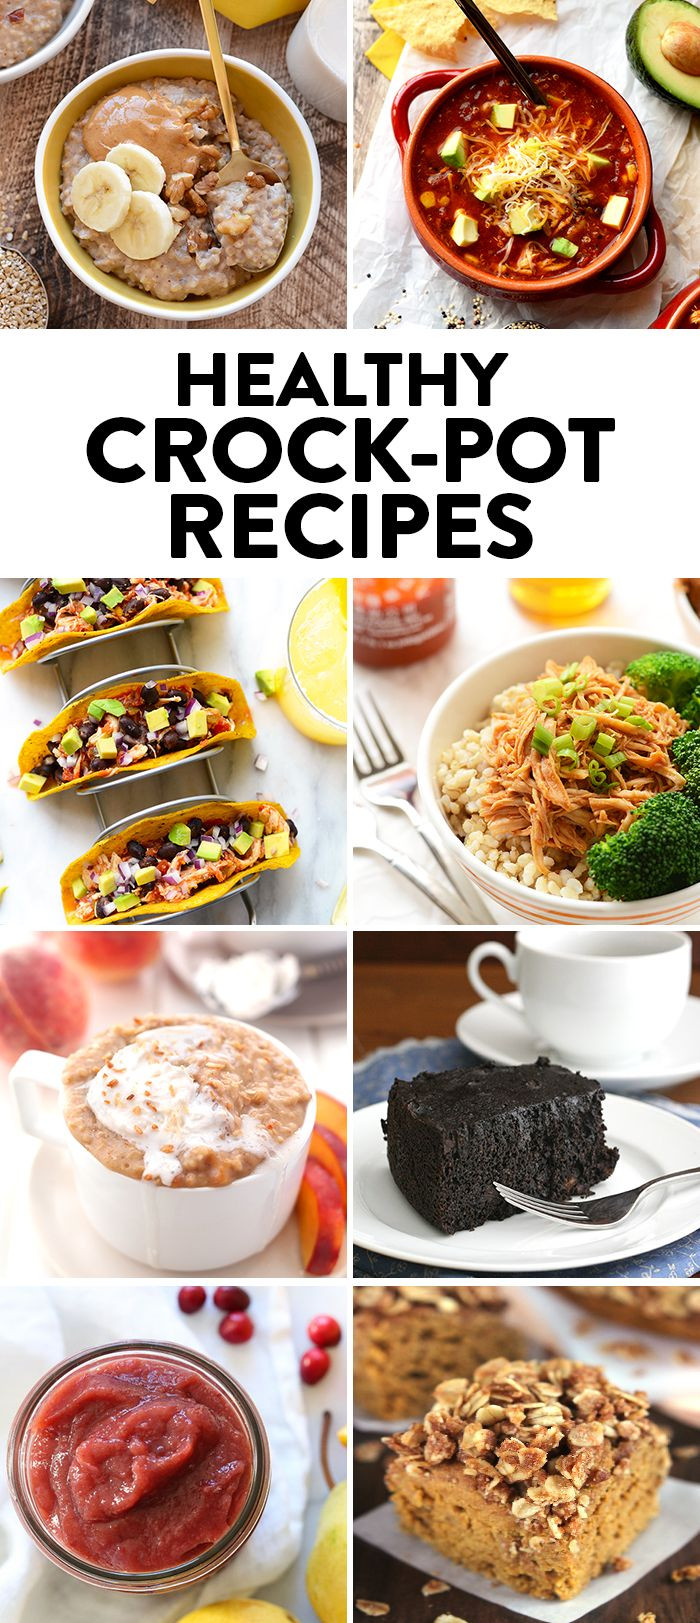 Heart Healthy Crock Pot Recipes
 1000 ideas about Healthy Crock Pots on Pinterest